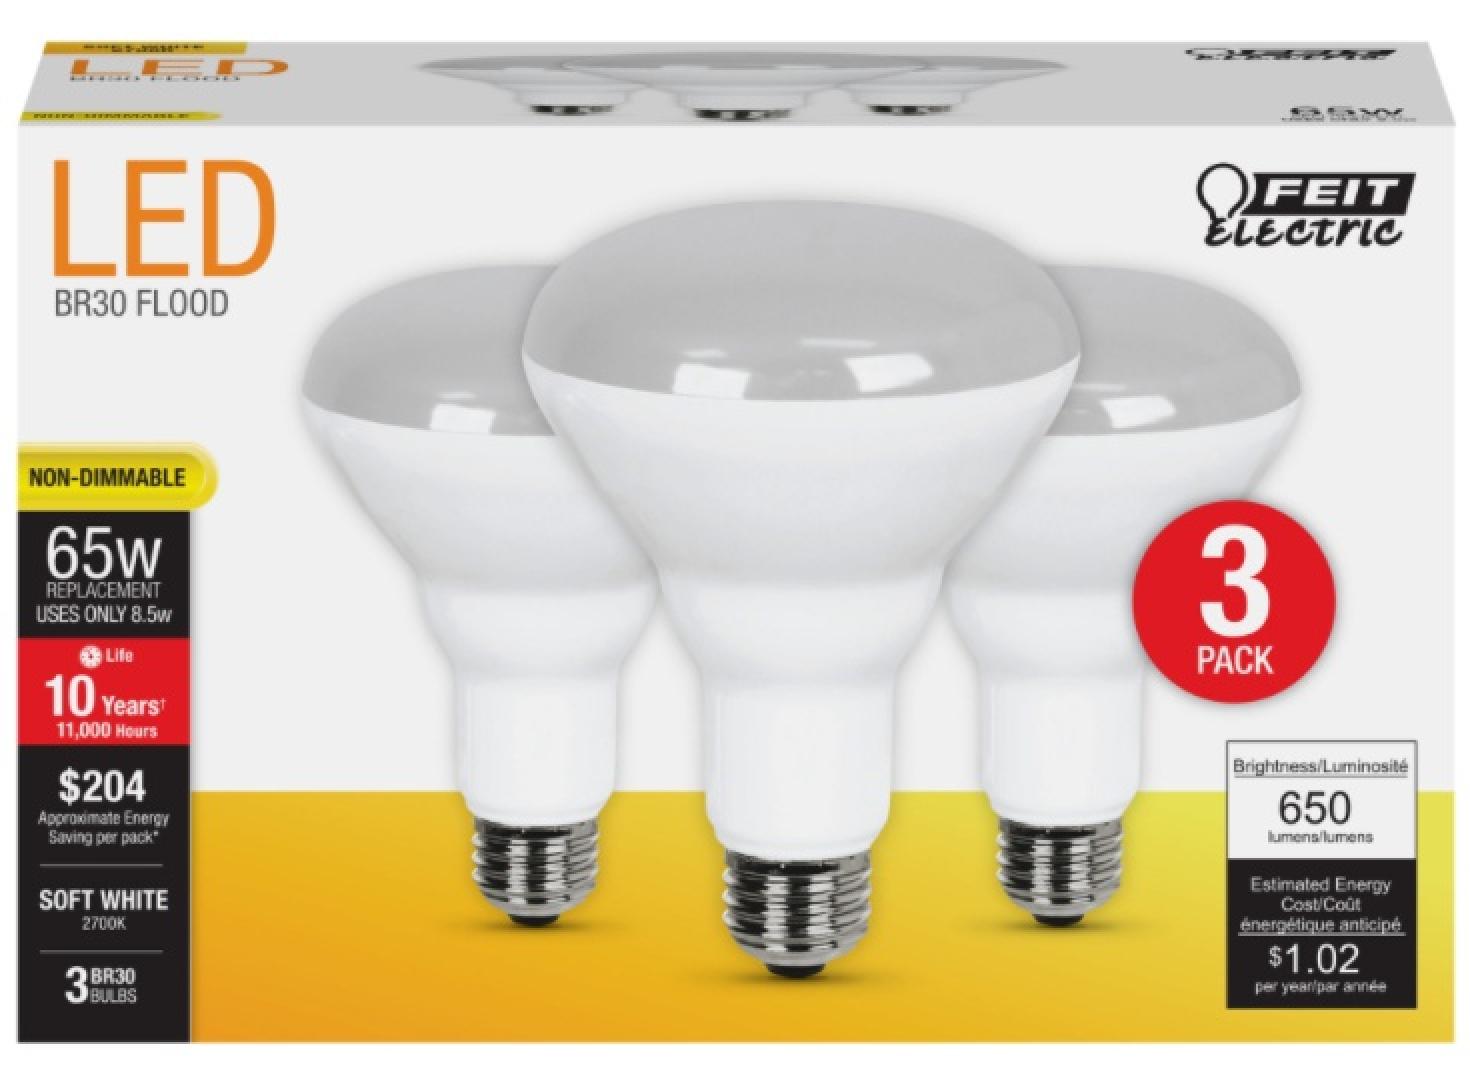 Feit Electric LED 65 Watt Equivalent 650 Lumen Non-Dimmable Reflector Light Bulb (3 Pack)